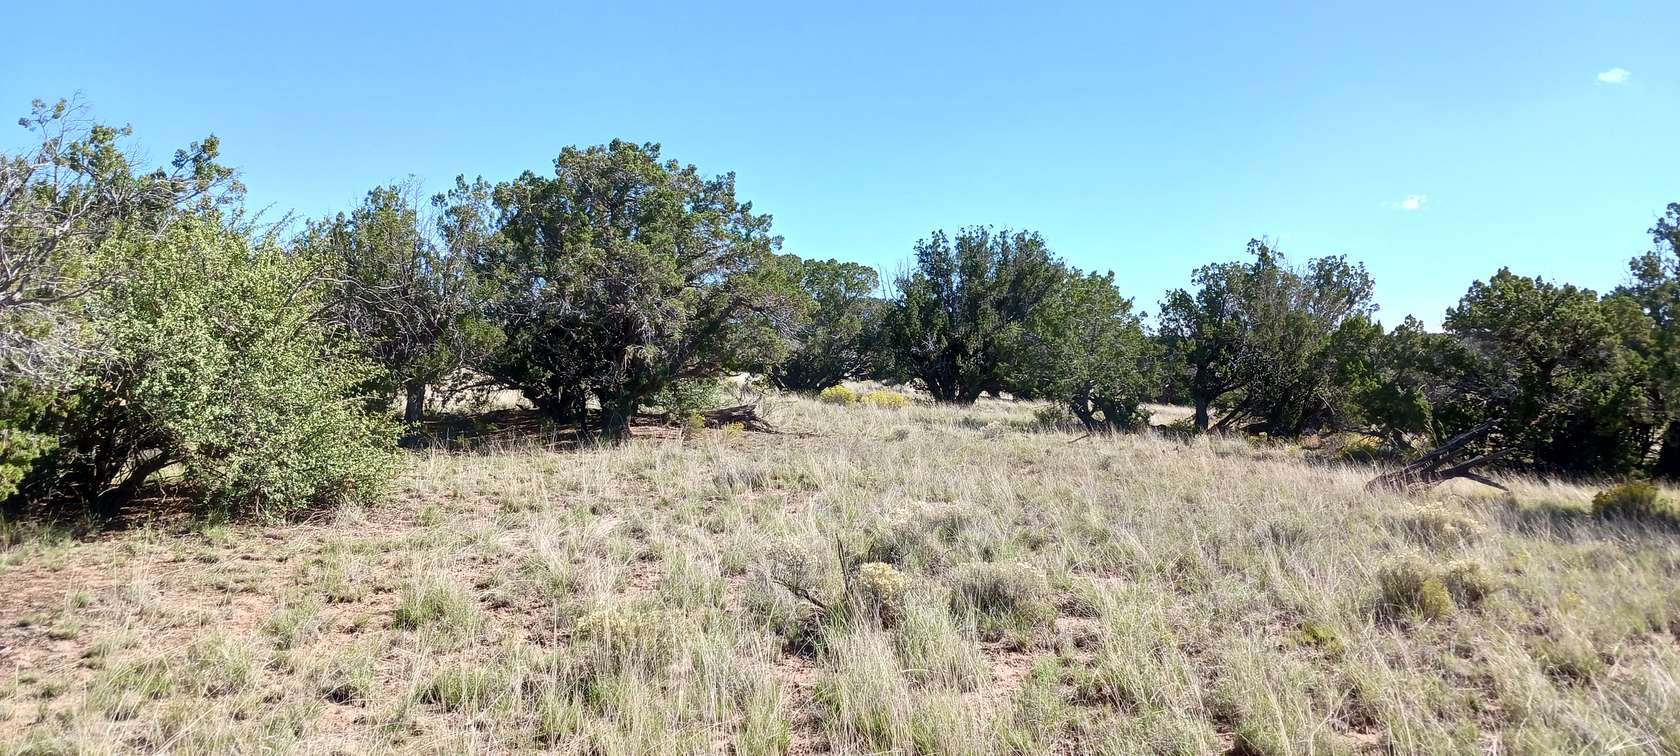 1.04 Acres of Recreational Land for Sale in Sanders, Arizona